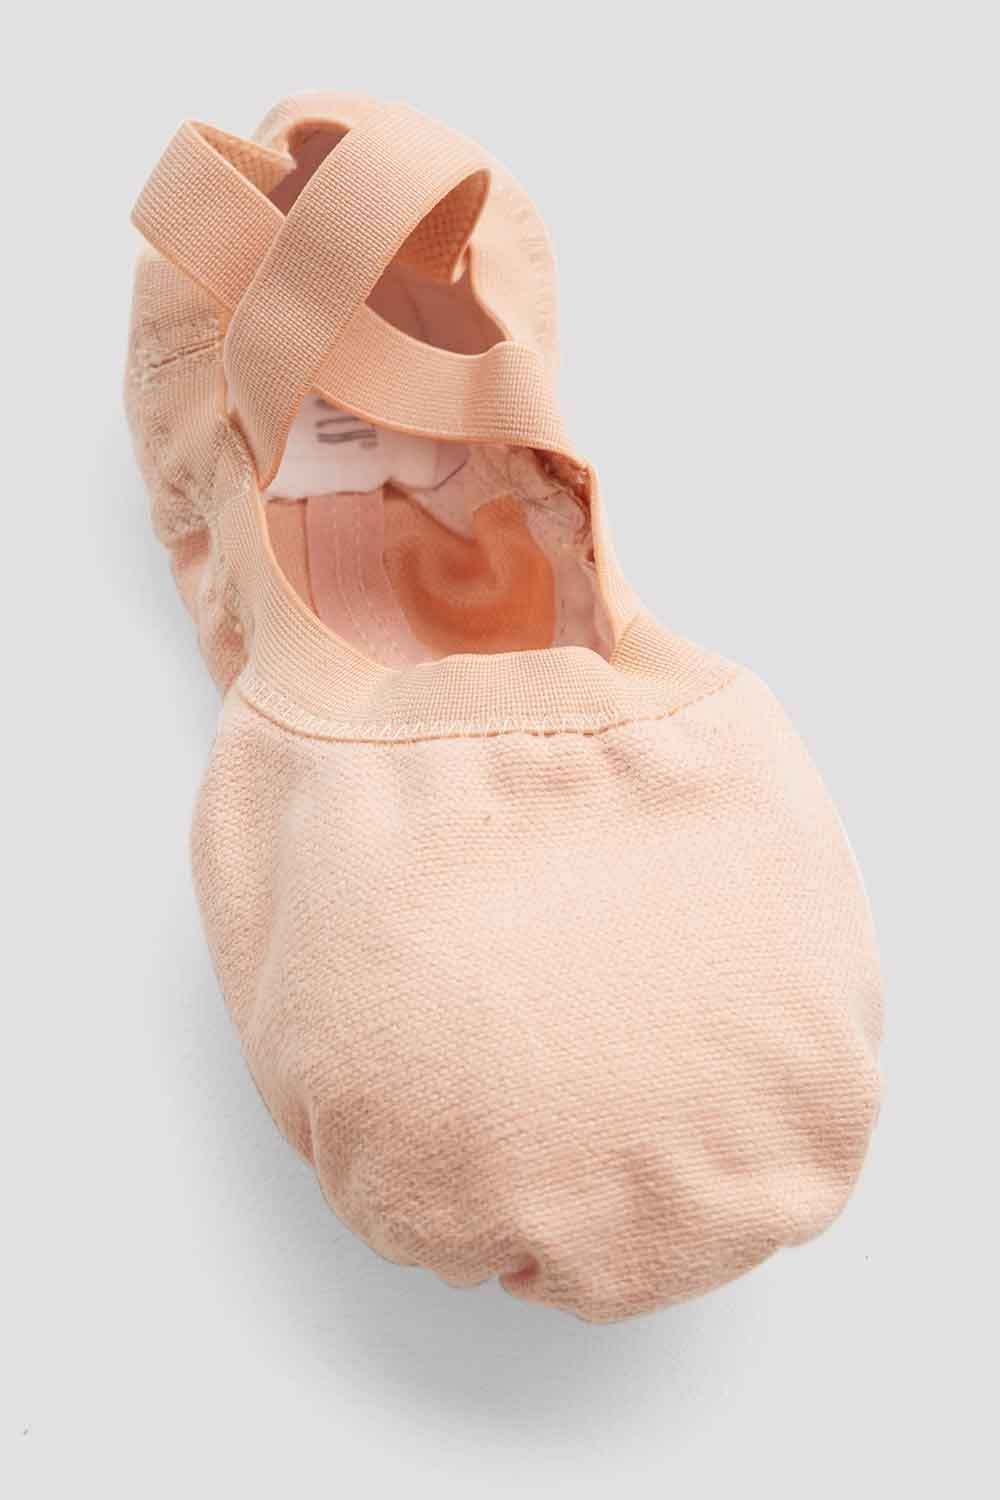 Bloch Unisex Covert Ballet Shoe Elastic